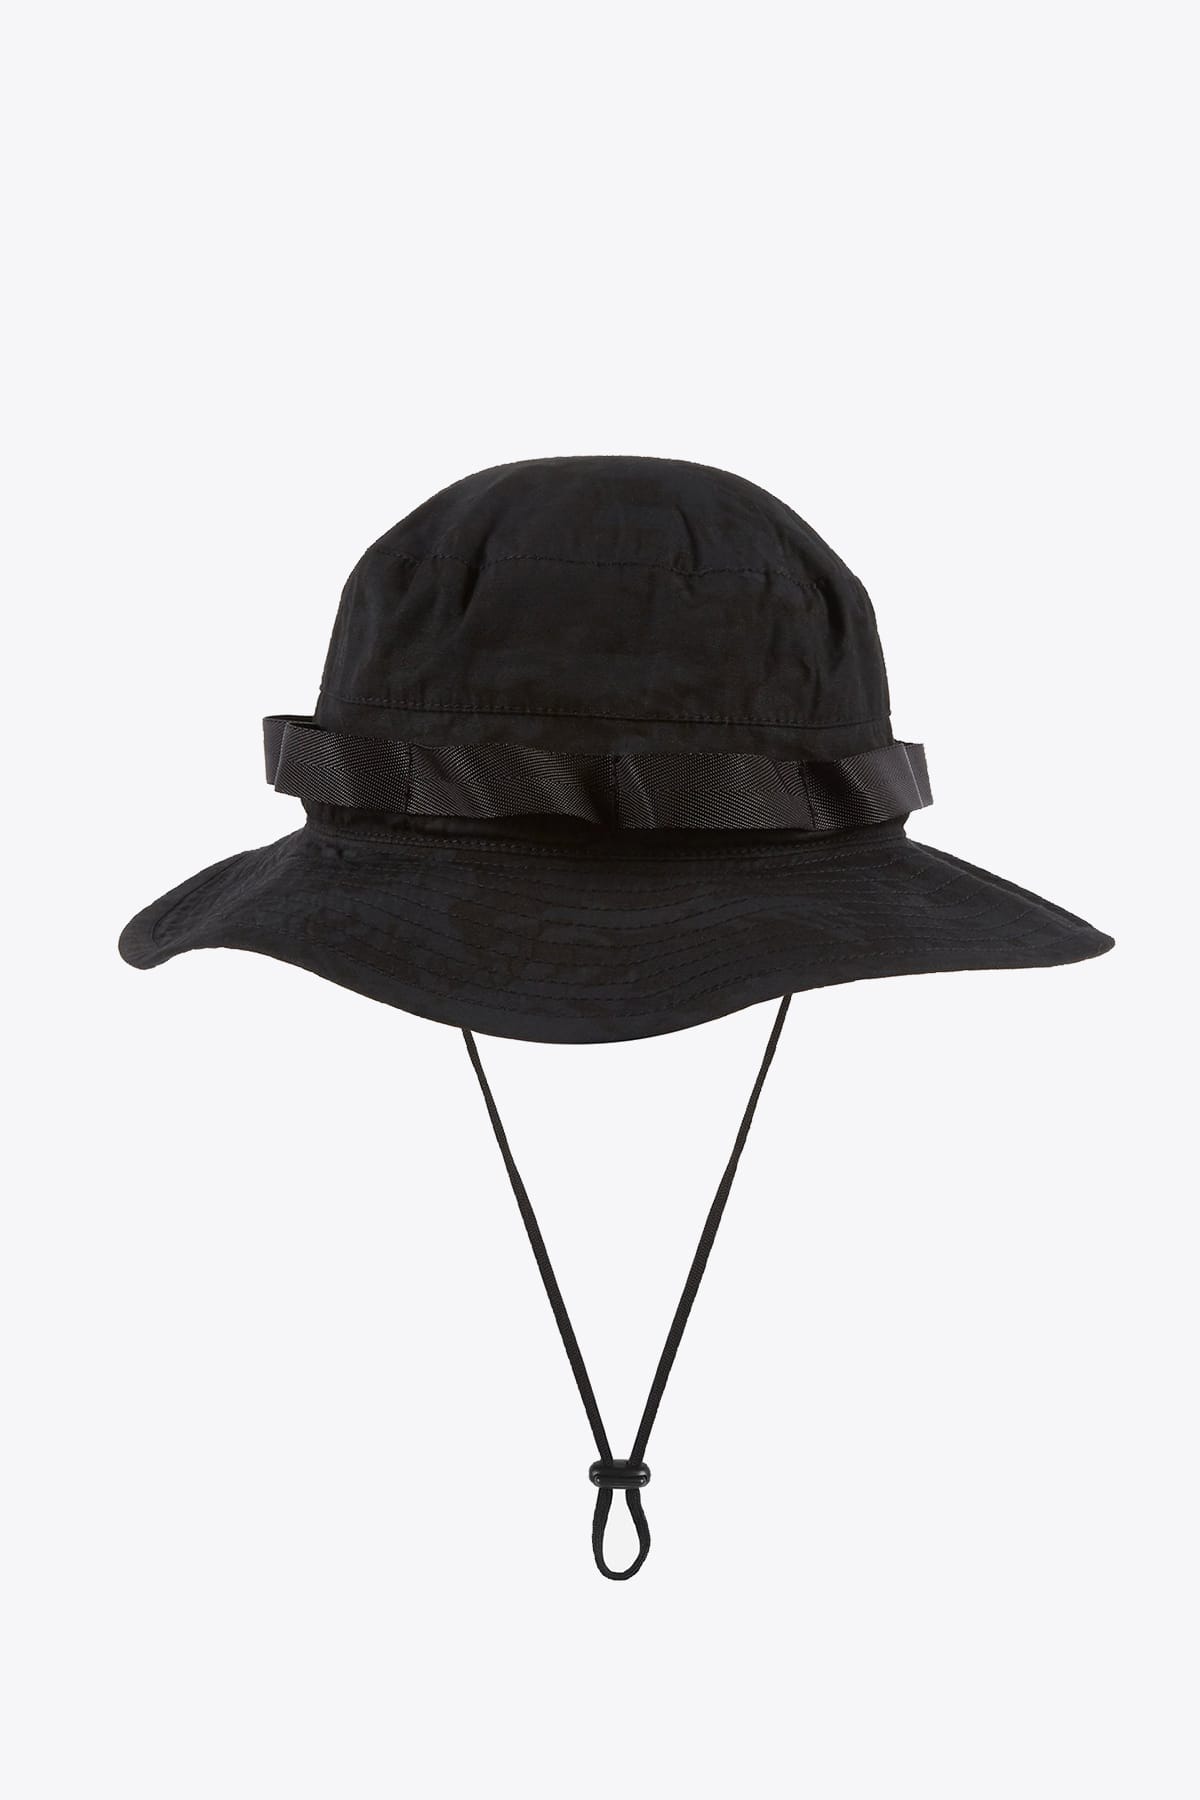 Maharishi Modified Camo Boonie Hat Dark grey camo boonie hat